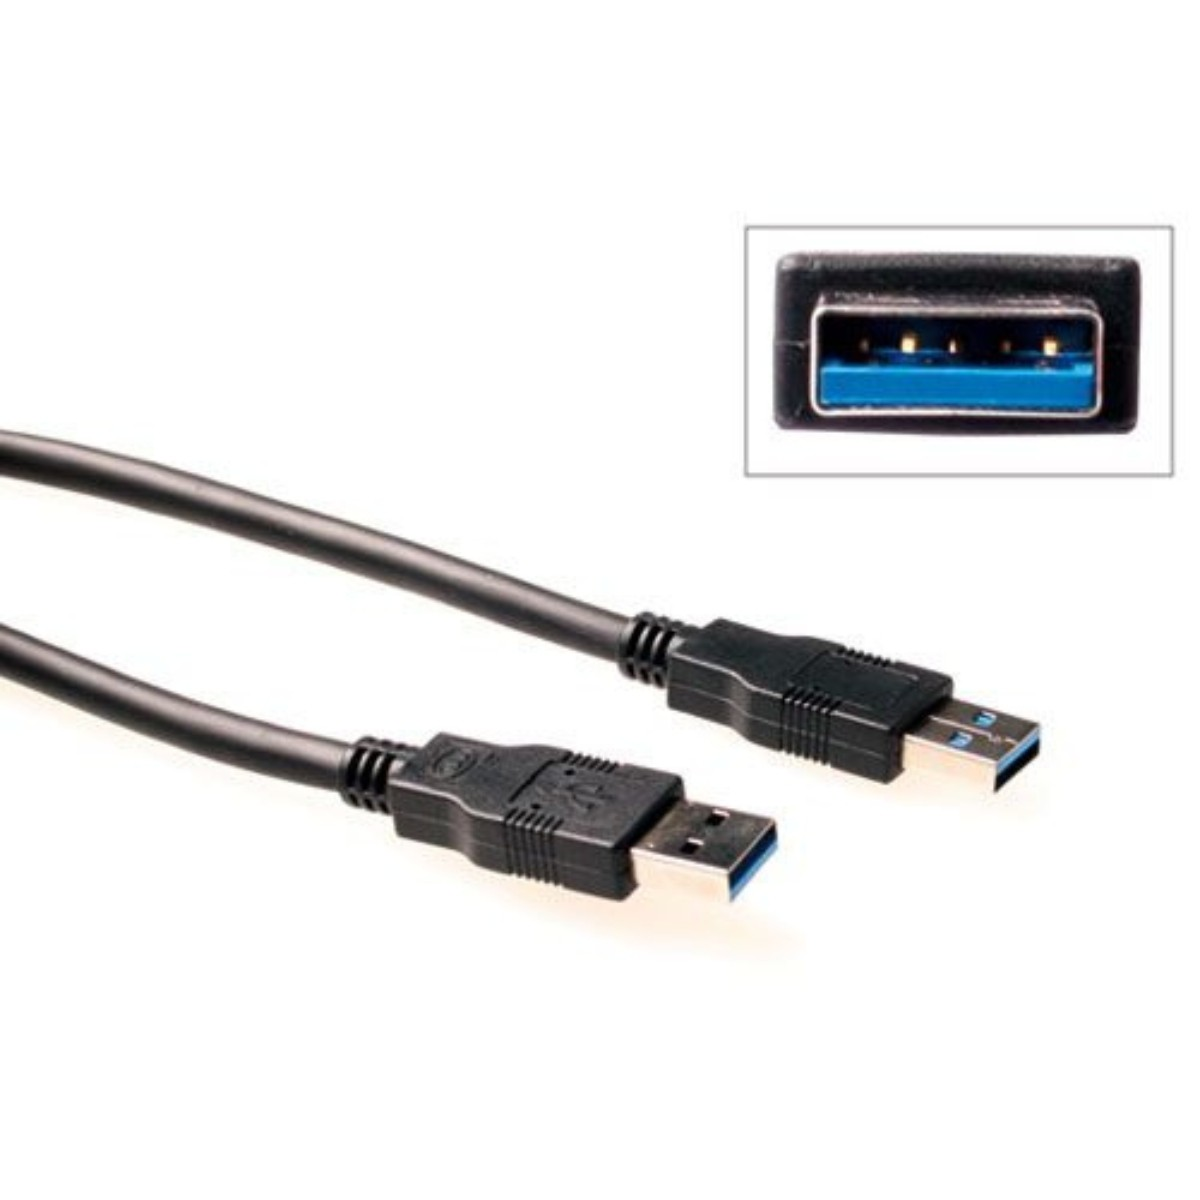 ACT Kabel SB3003 USB